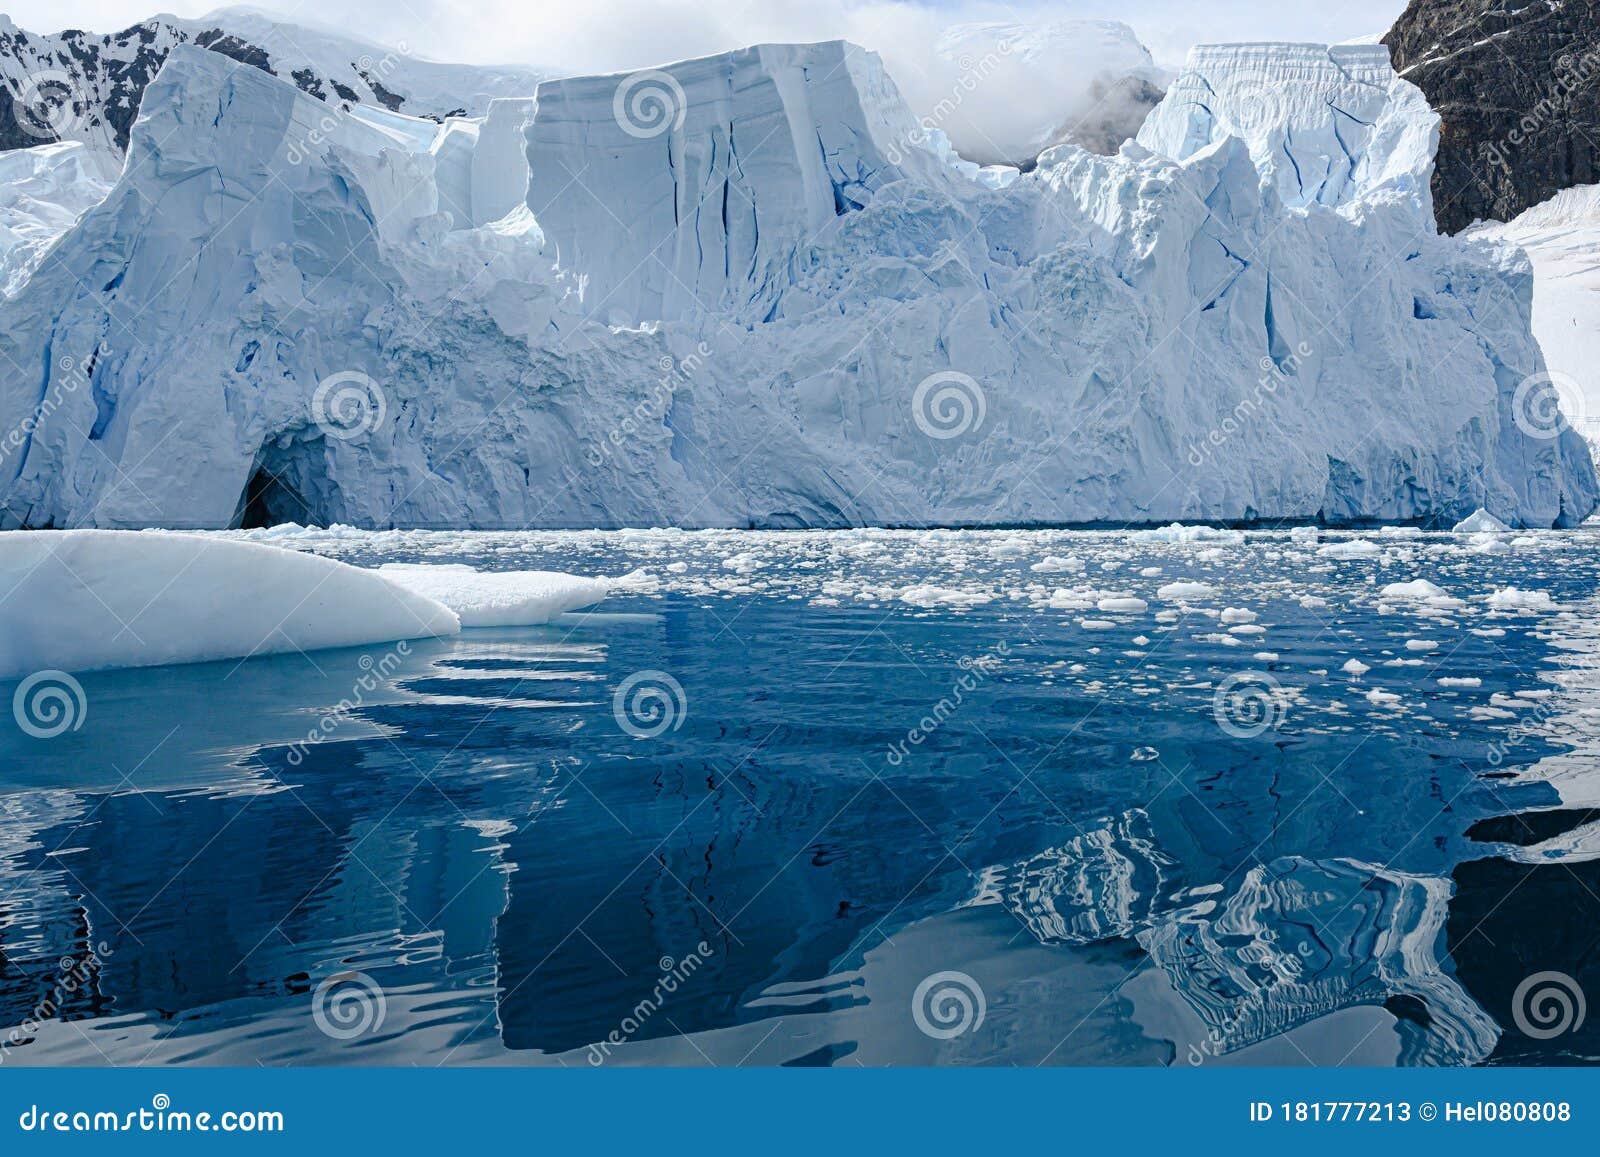 glacier ice shelf in antarctica, majestic blue and white glacier edge reflecting in blue sea water, paradise bay, antarctica